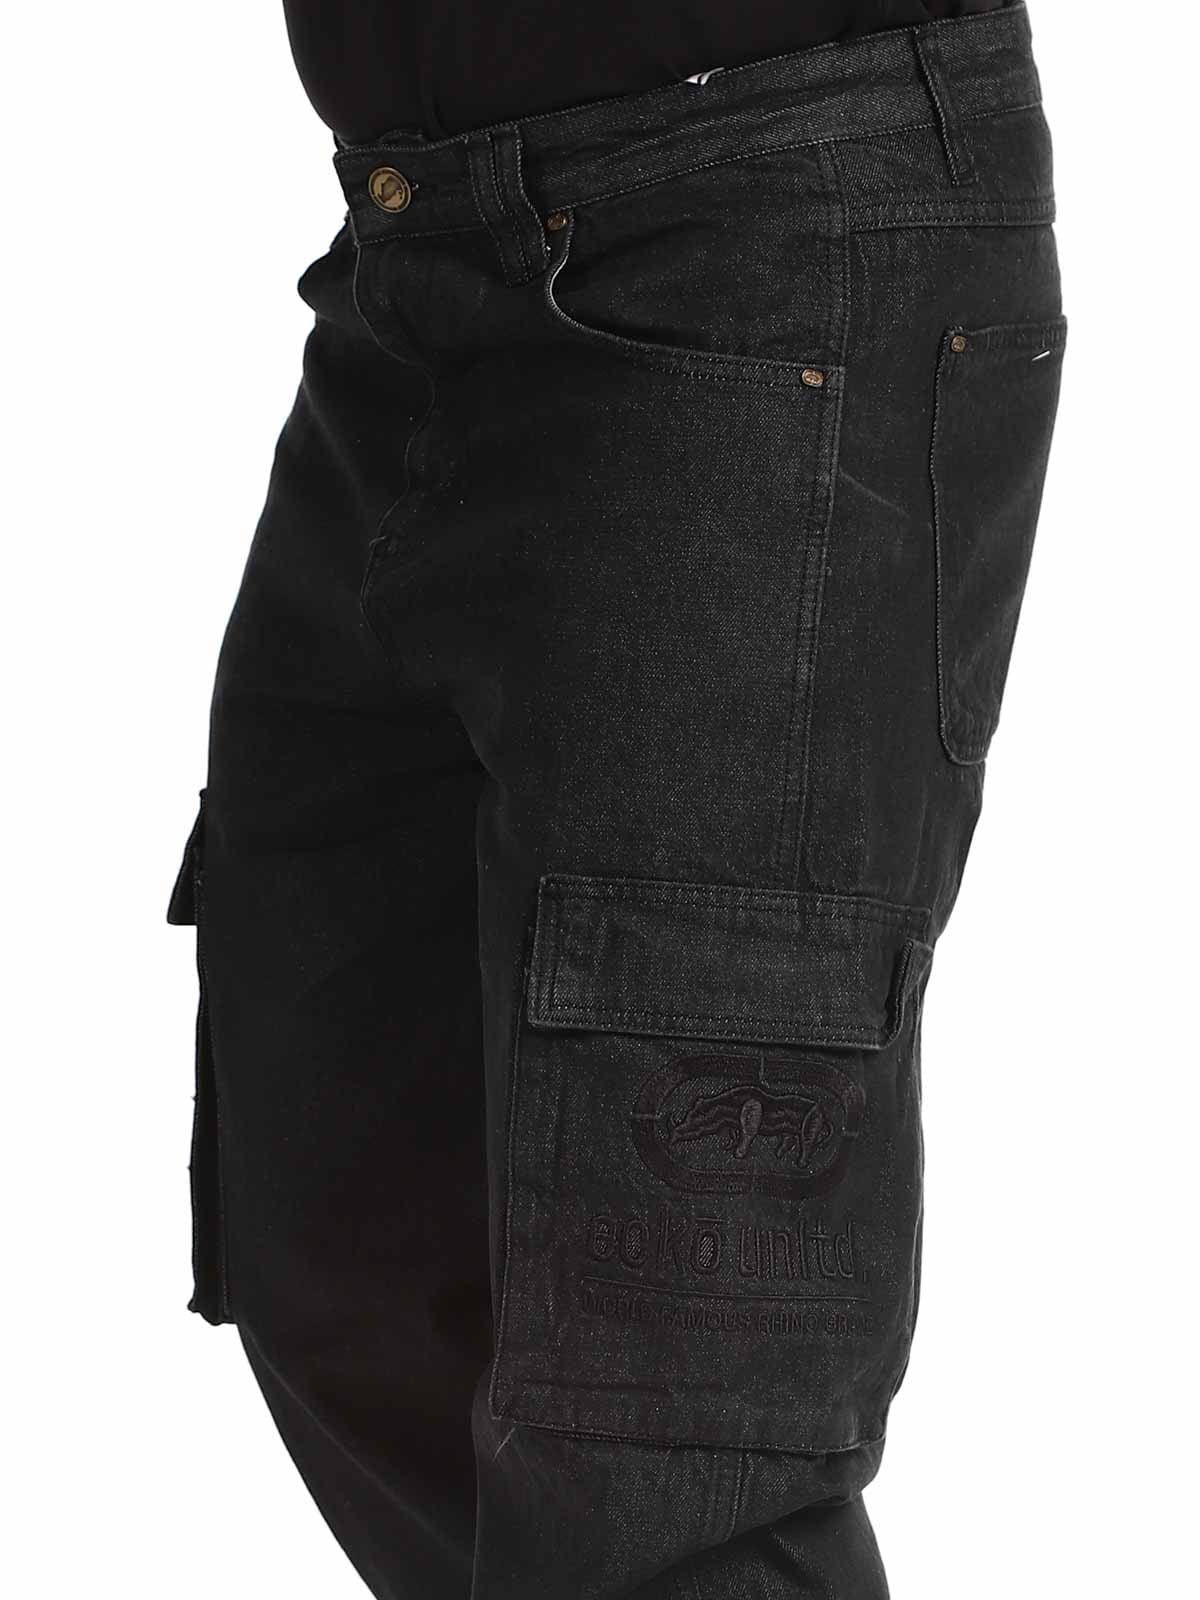 Ecko-unitd-jeans8.jpg